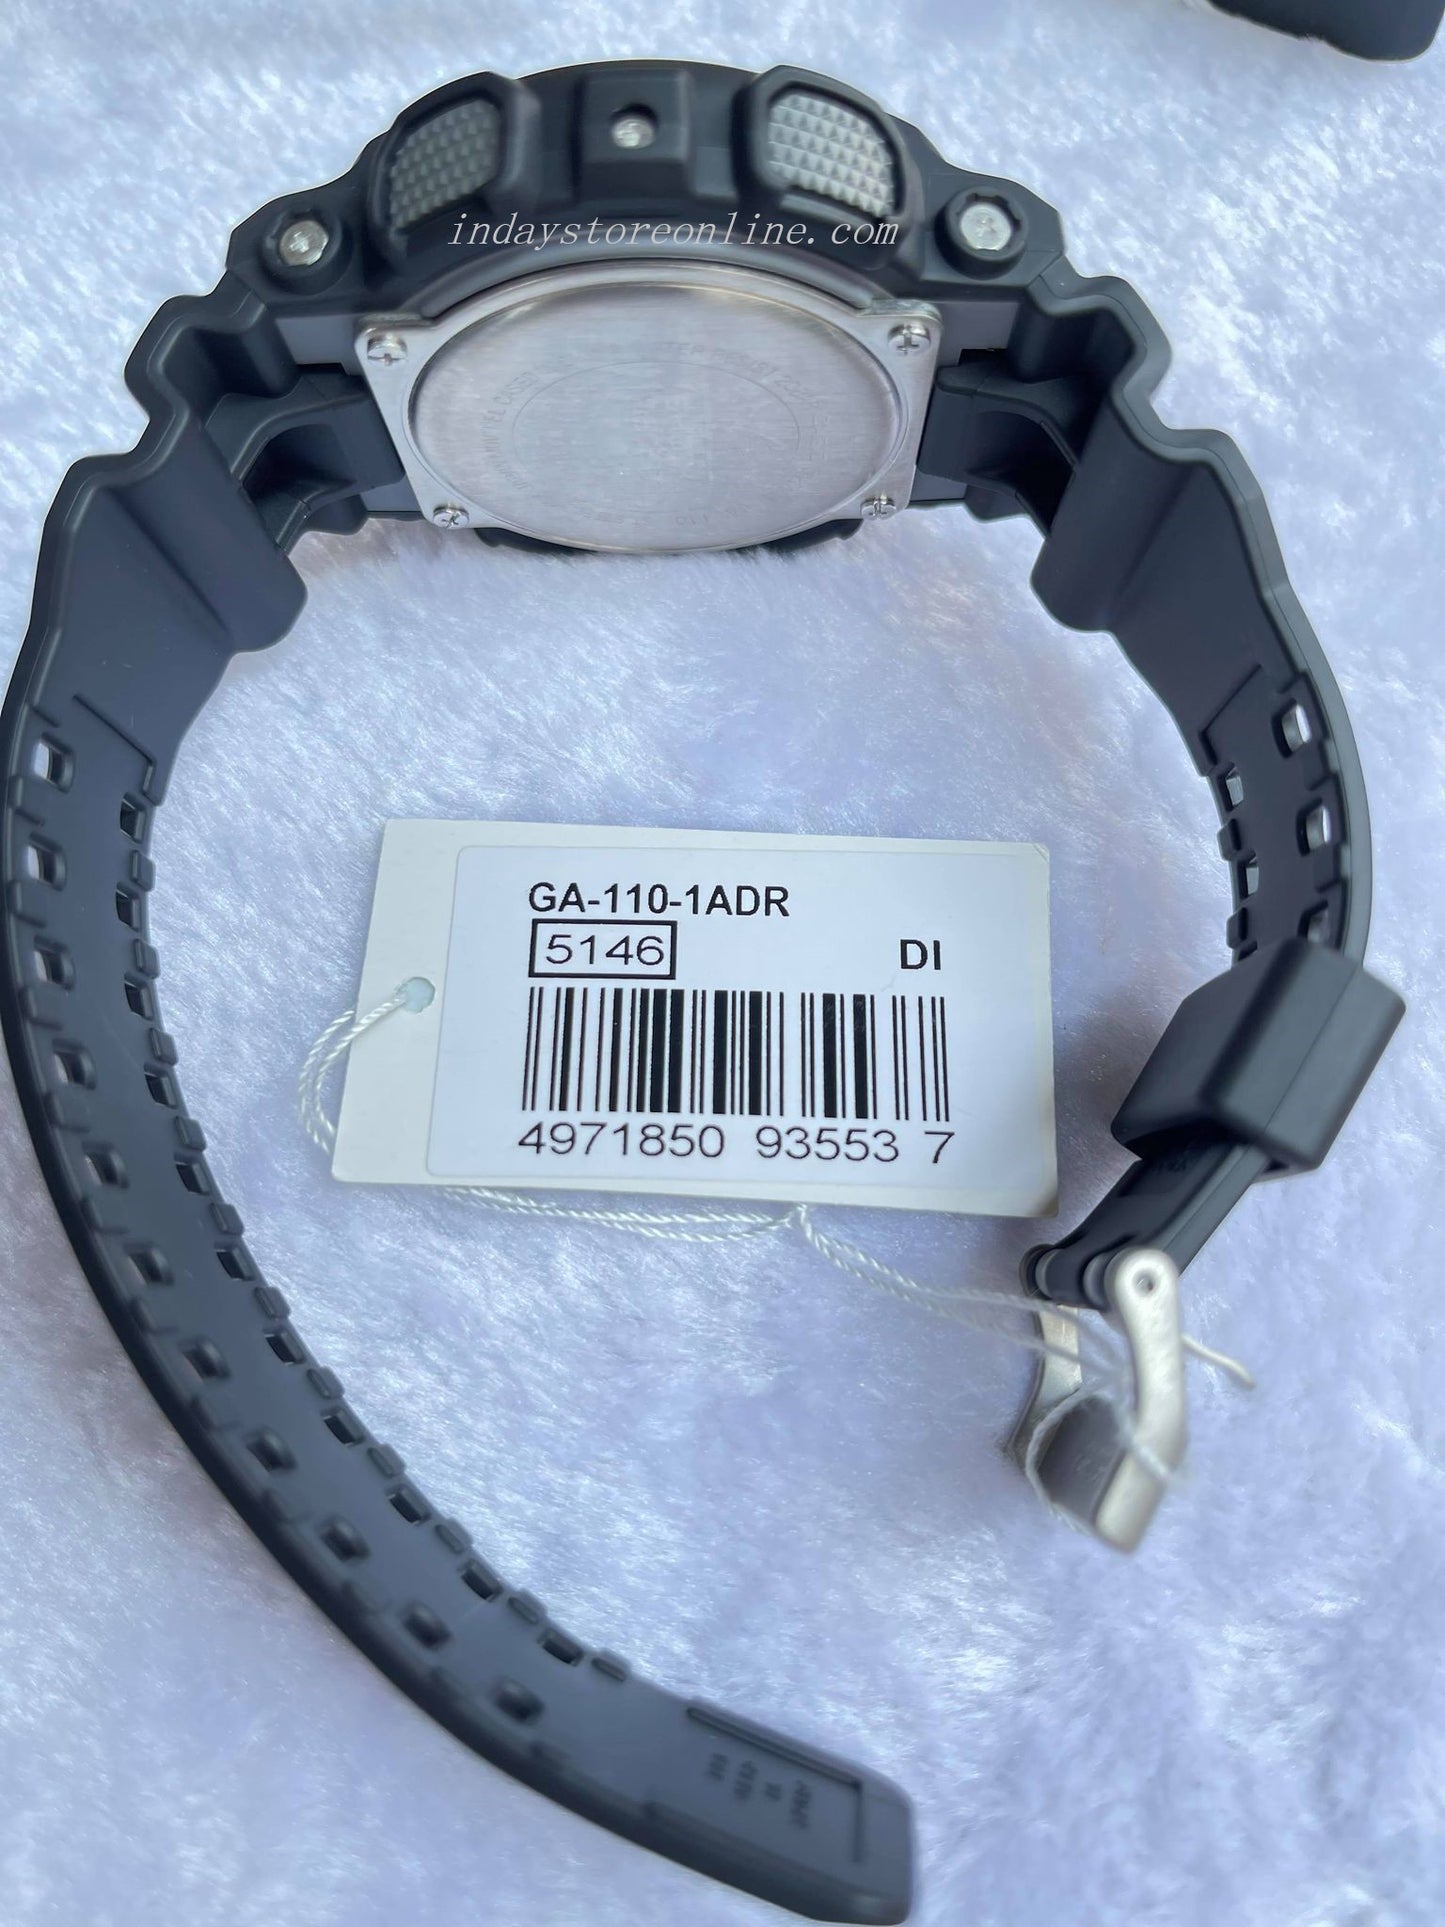 Casio G-Shock Men's Watch GA-110-1A Analog-Digital Best Seller Shock Resistant Magnetic Resistant